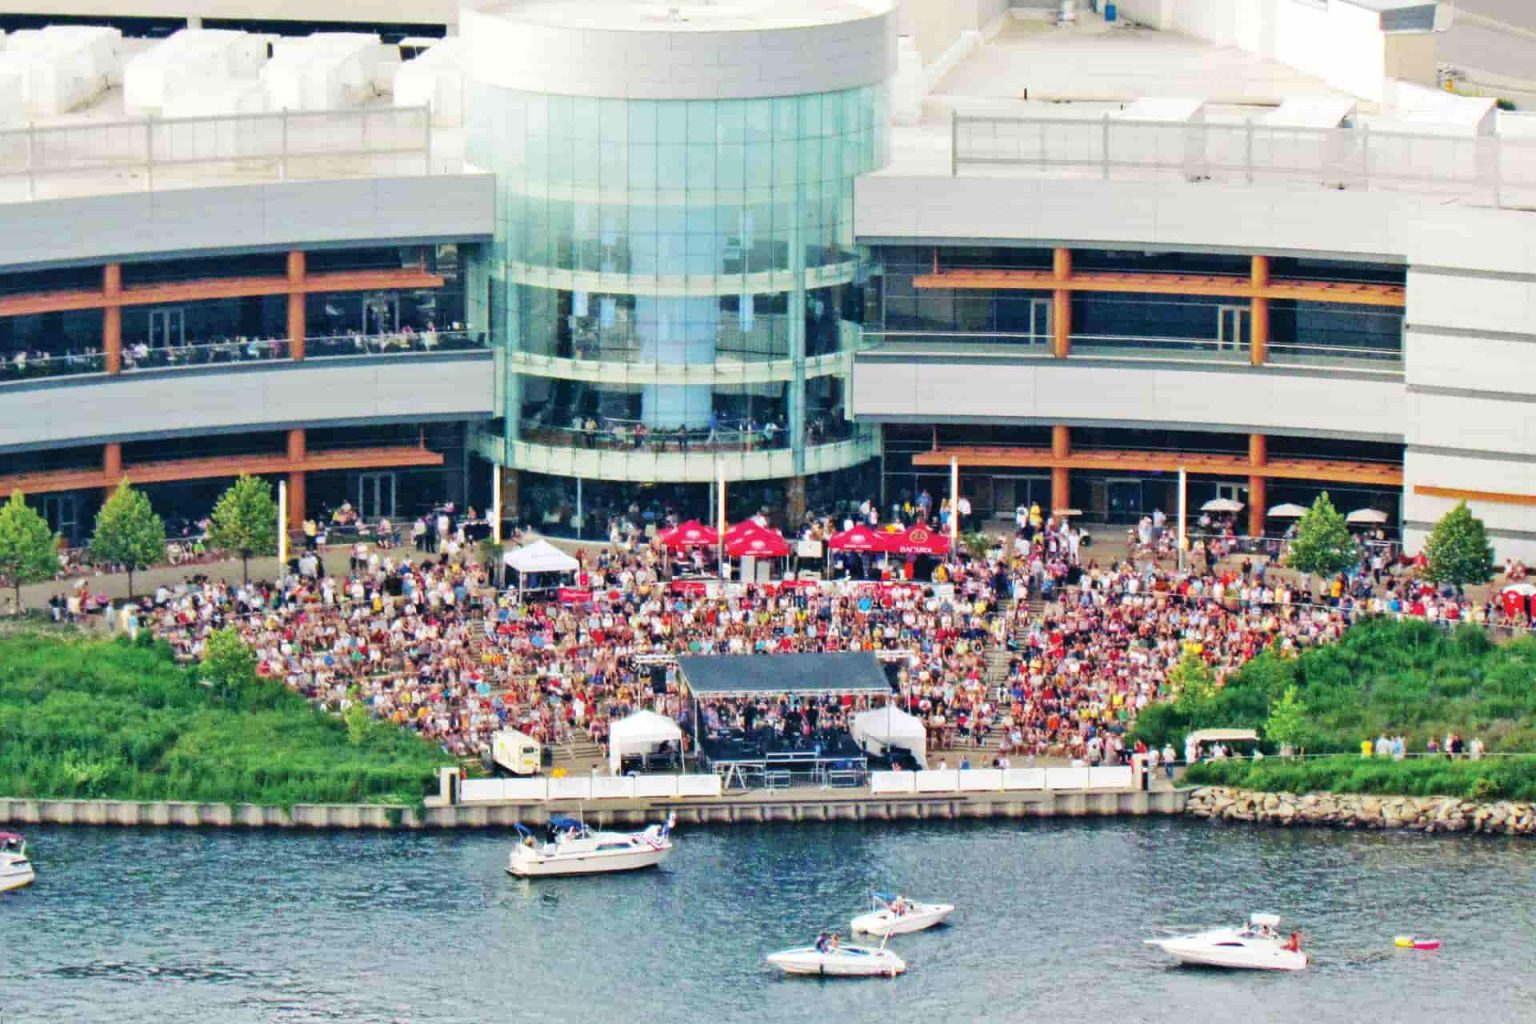 river city casino events center parking